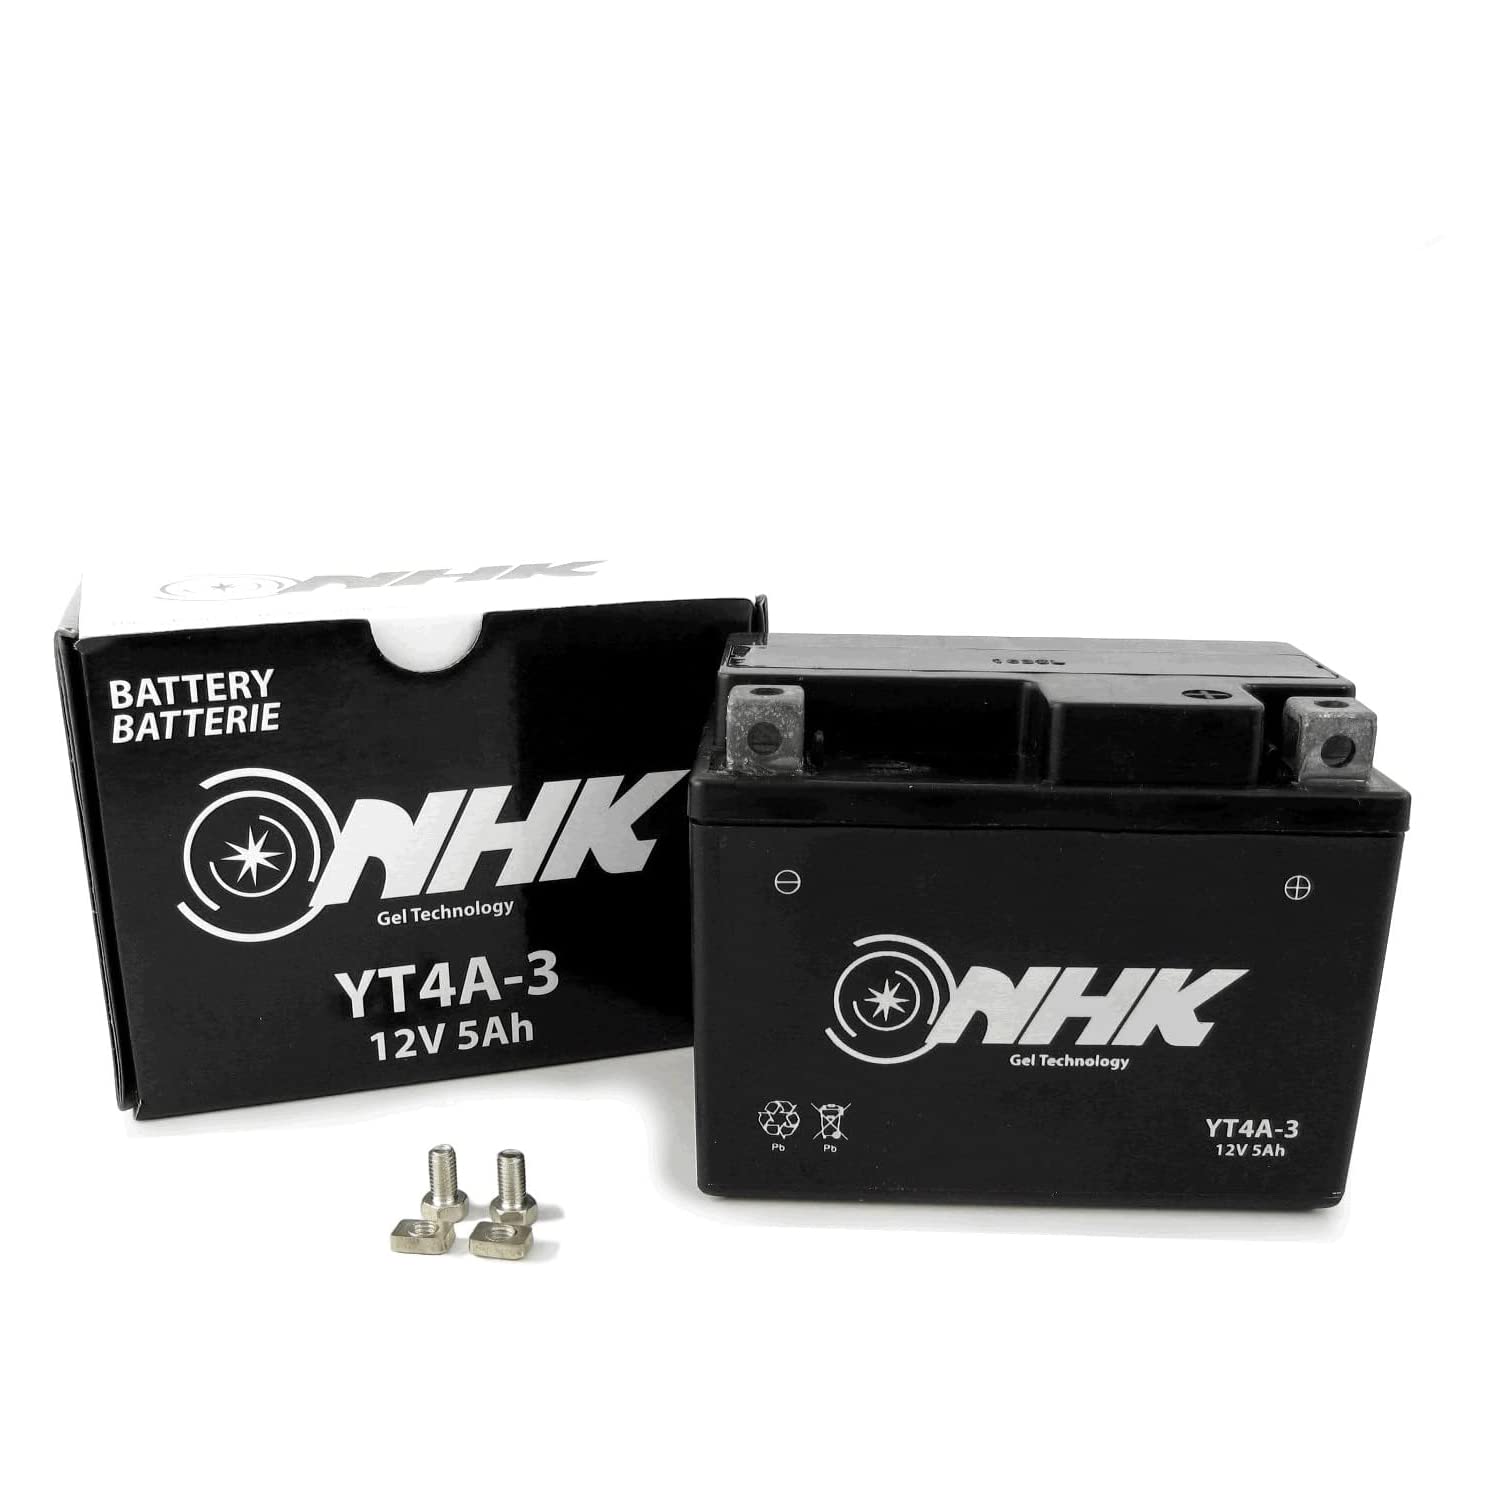 Wartungsfreie Gel Batterie 5Ah kompatibel mit MBK Booster 50 NG 99- SA05, Nitro 50 Naked 05-12 4B0, Booster 50 12 Zoll 04-10 SA231 (YT4A-3) von Area1